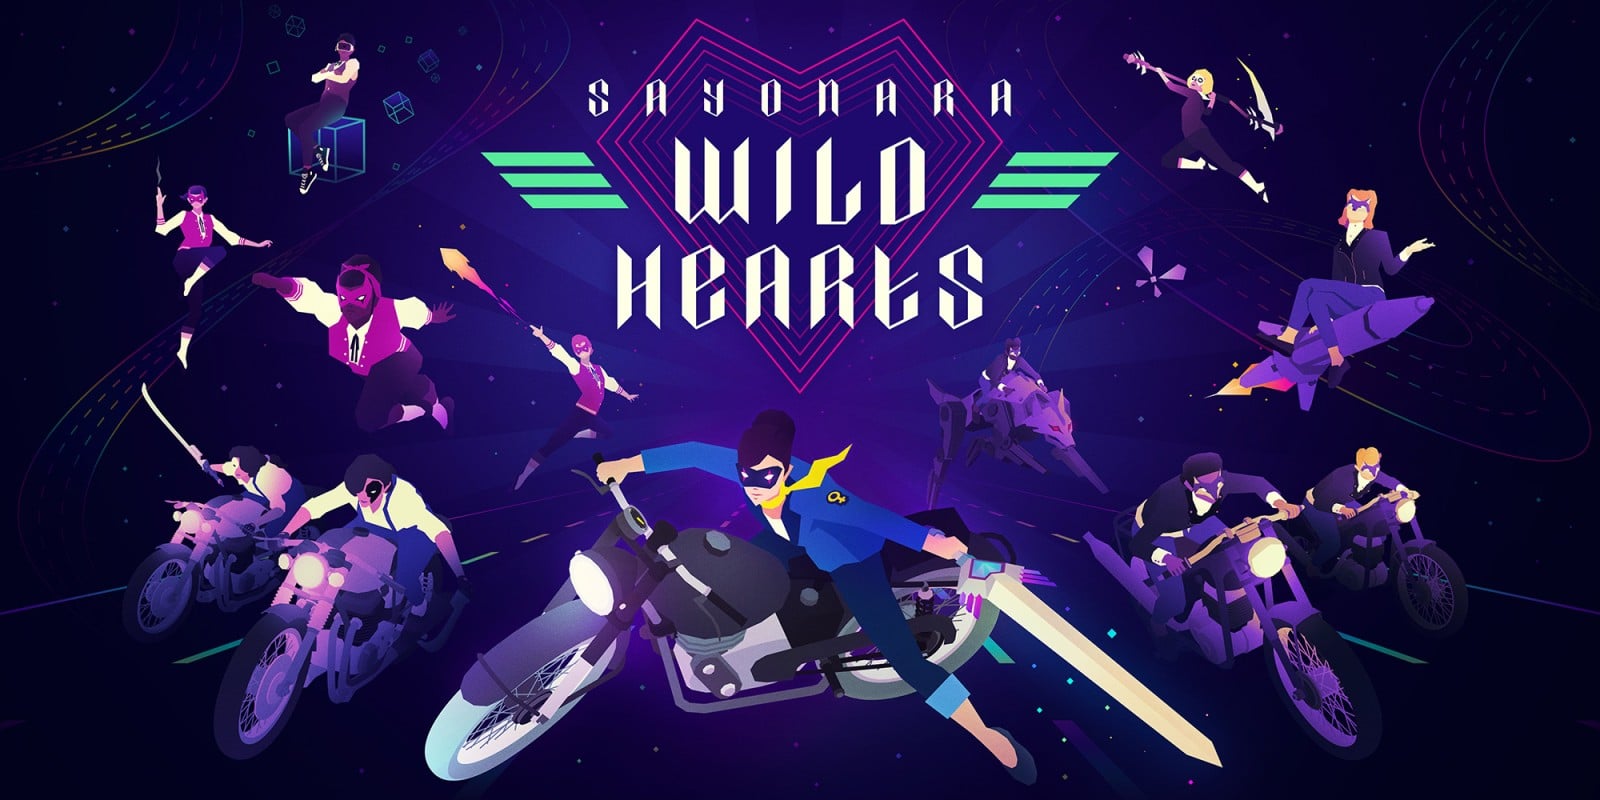 SayonaraWild Hearts, Nintendo Switch, iOS, PC